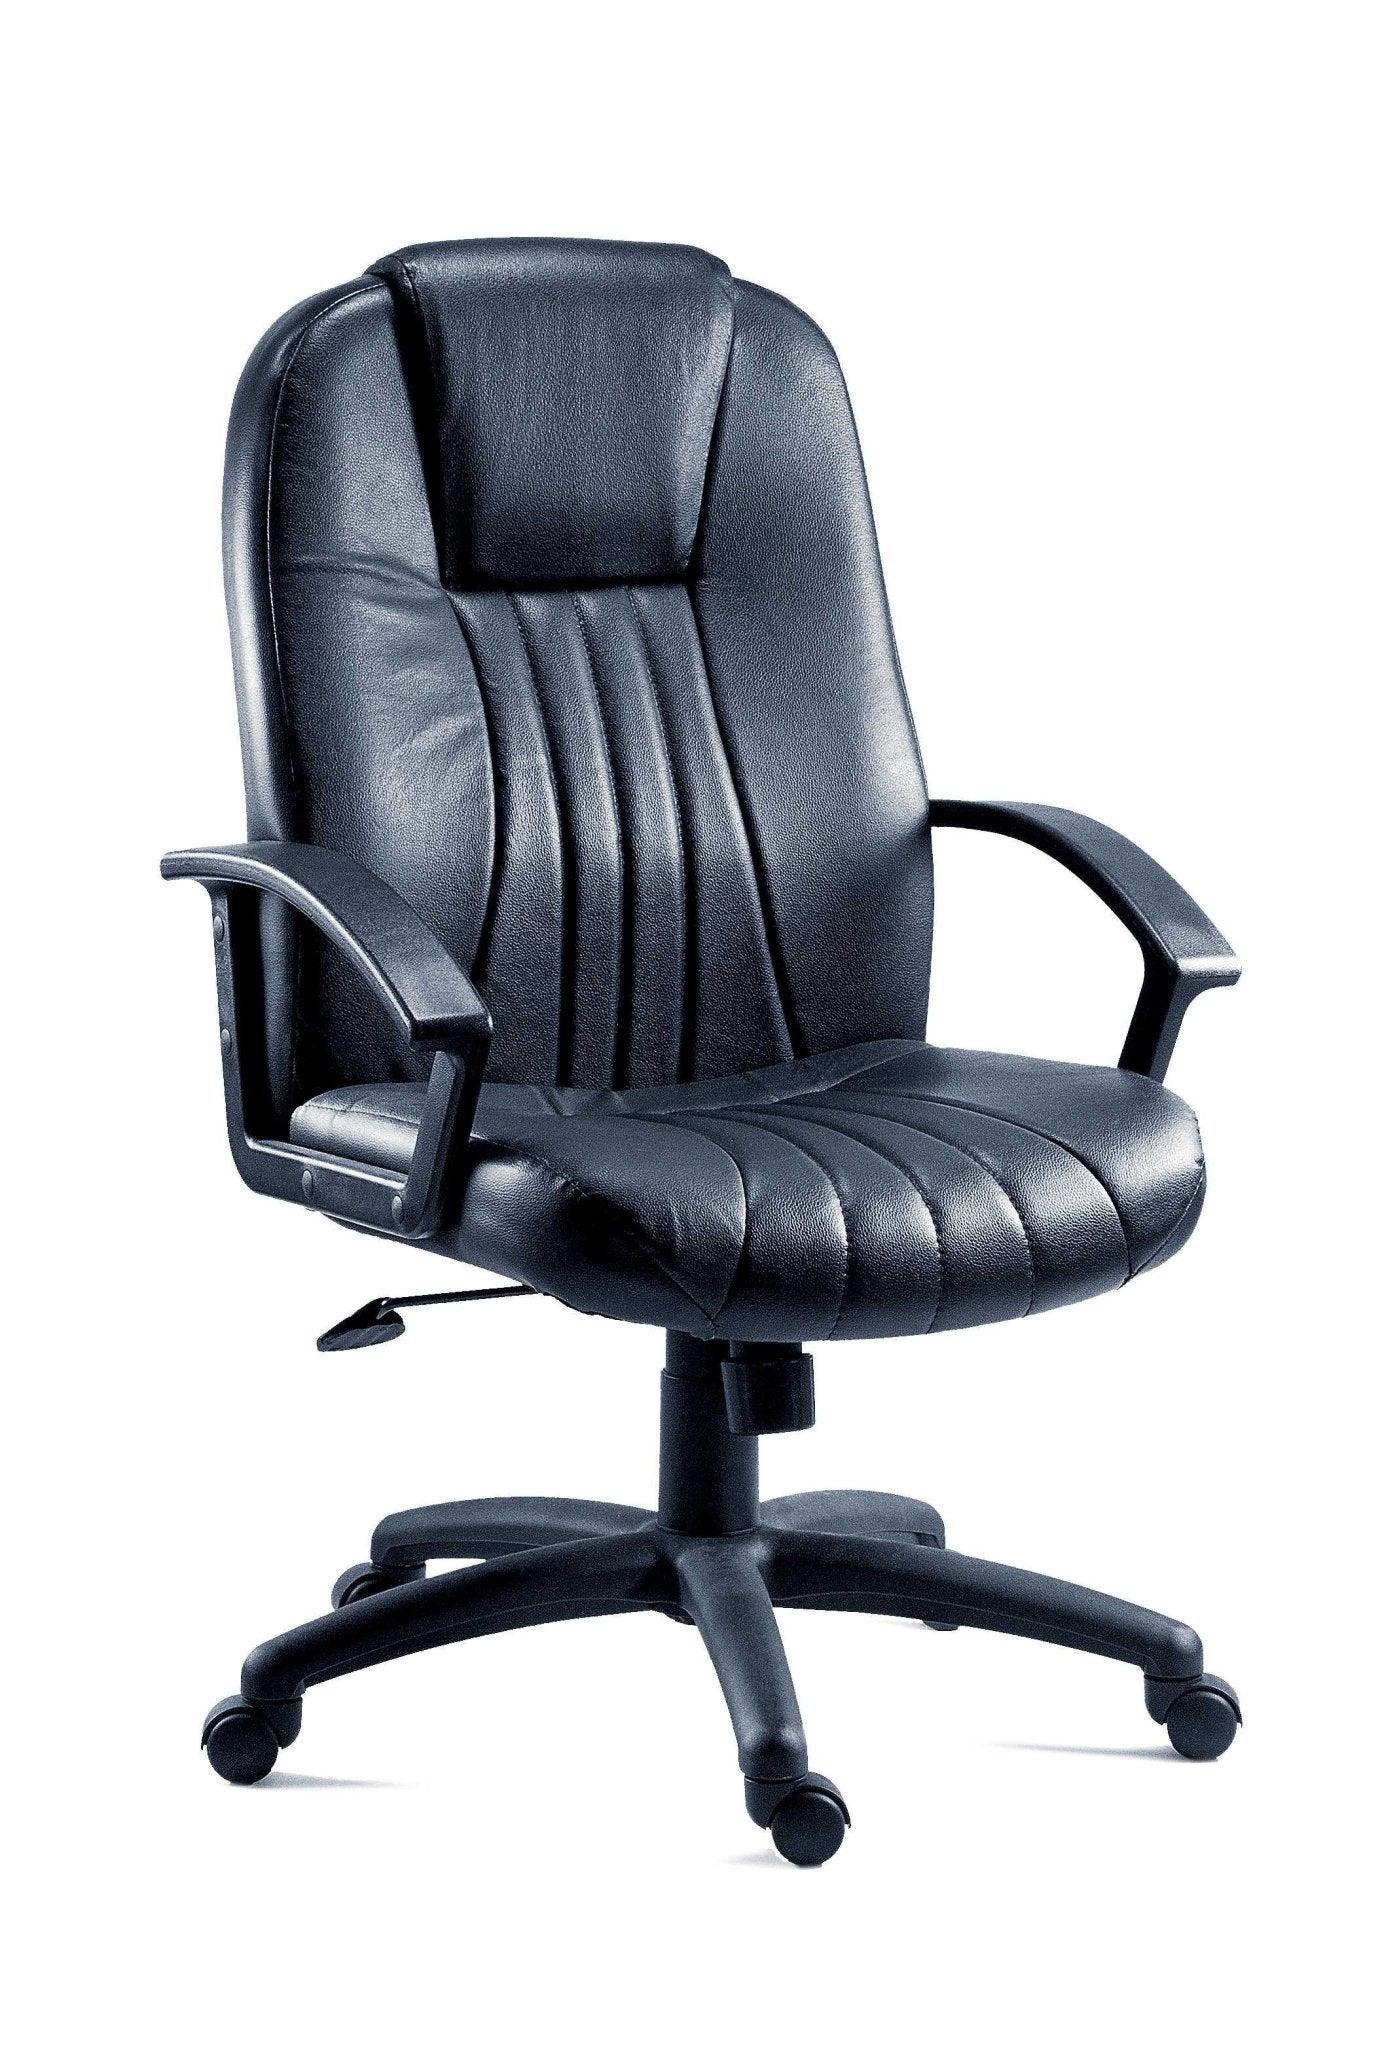 City leather office chair - crimblefest furniture - image 1